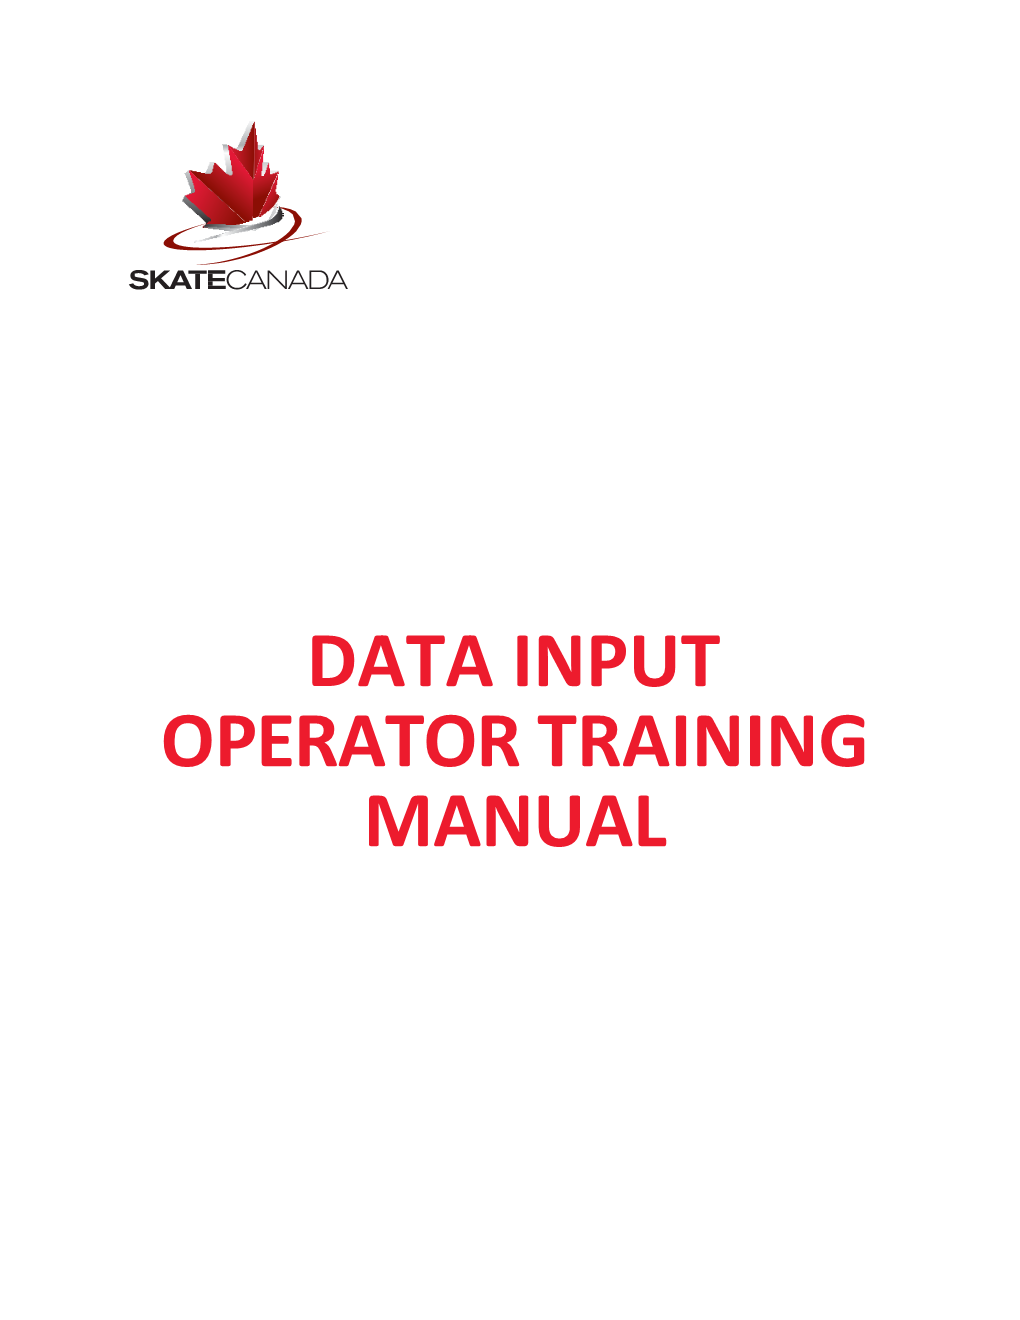 Data Input Operator Training Manual